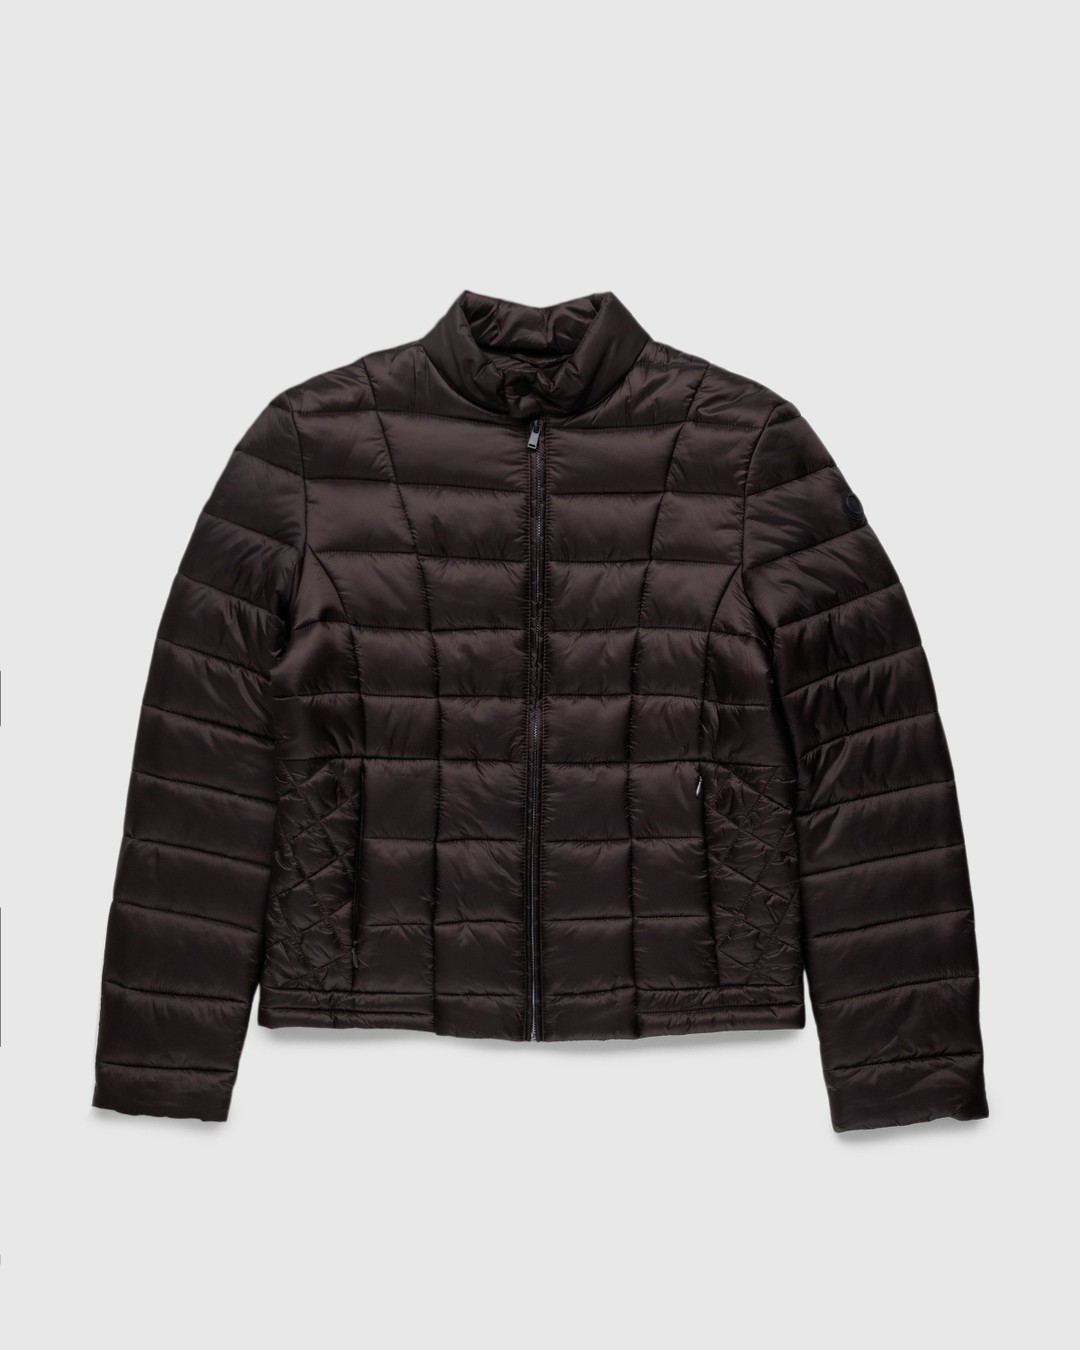 Trussardi – Quilted Jacket Matt Nylon - Outerwear - Green - Image 1